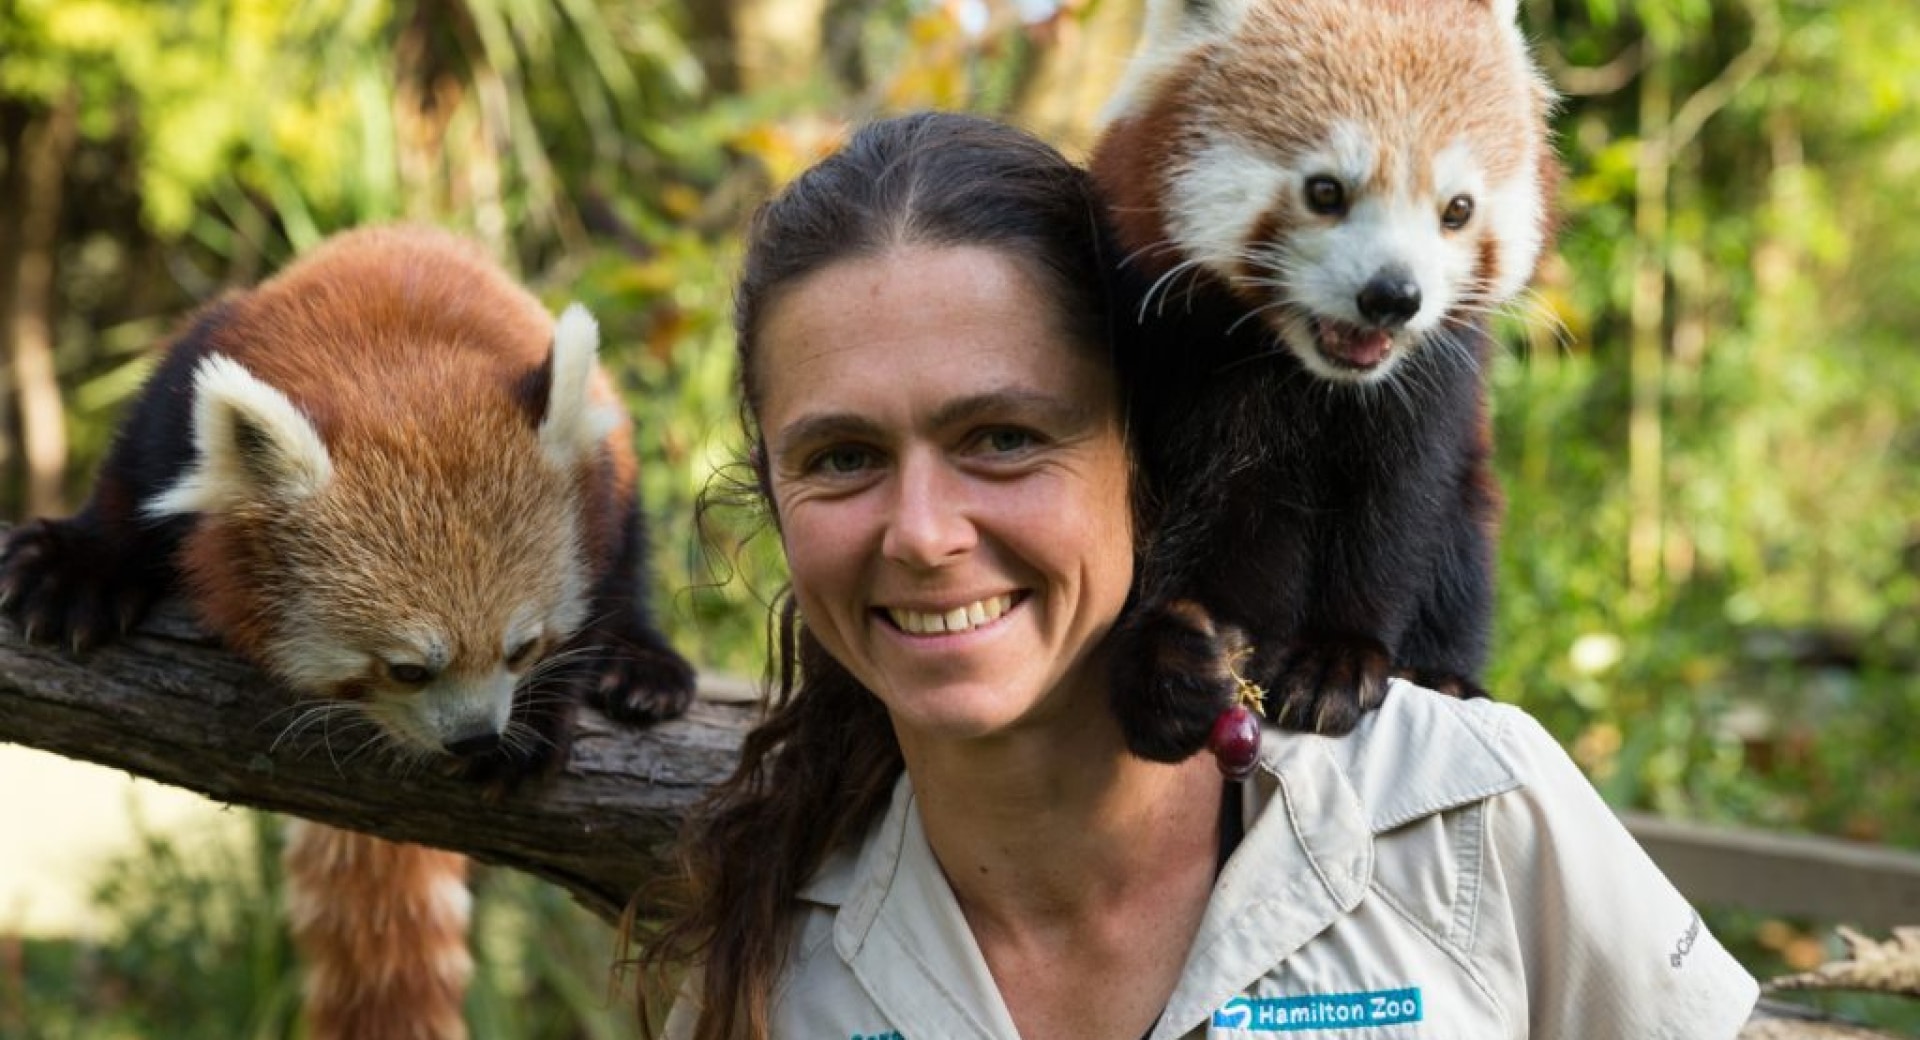 Eco Zoo Trips: Q & A with Trip Host Sarah Jones